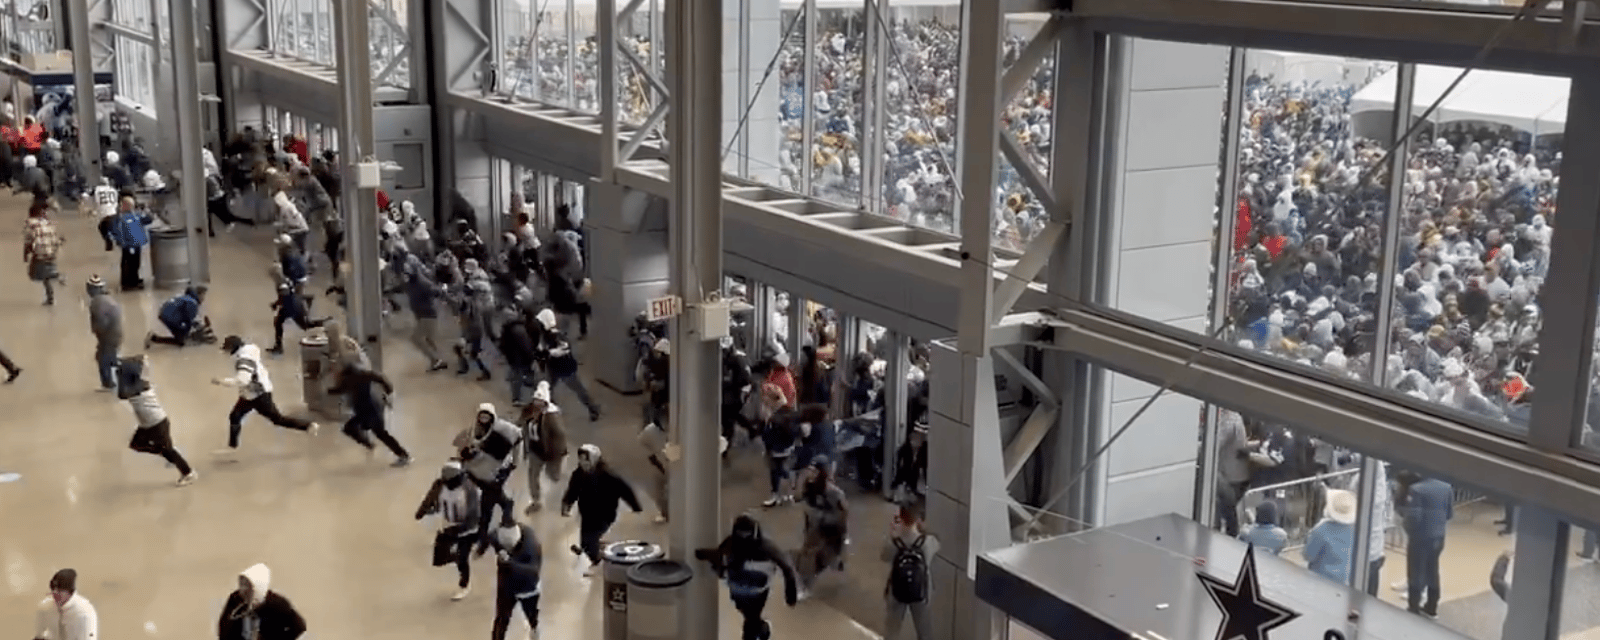 VIDEO: Fans rush AT&T Stadium after doors open 